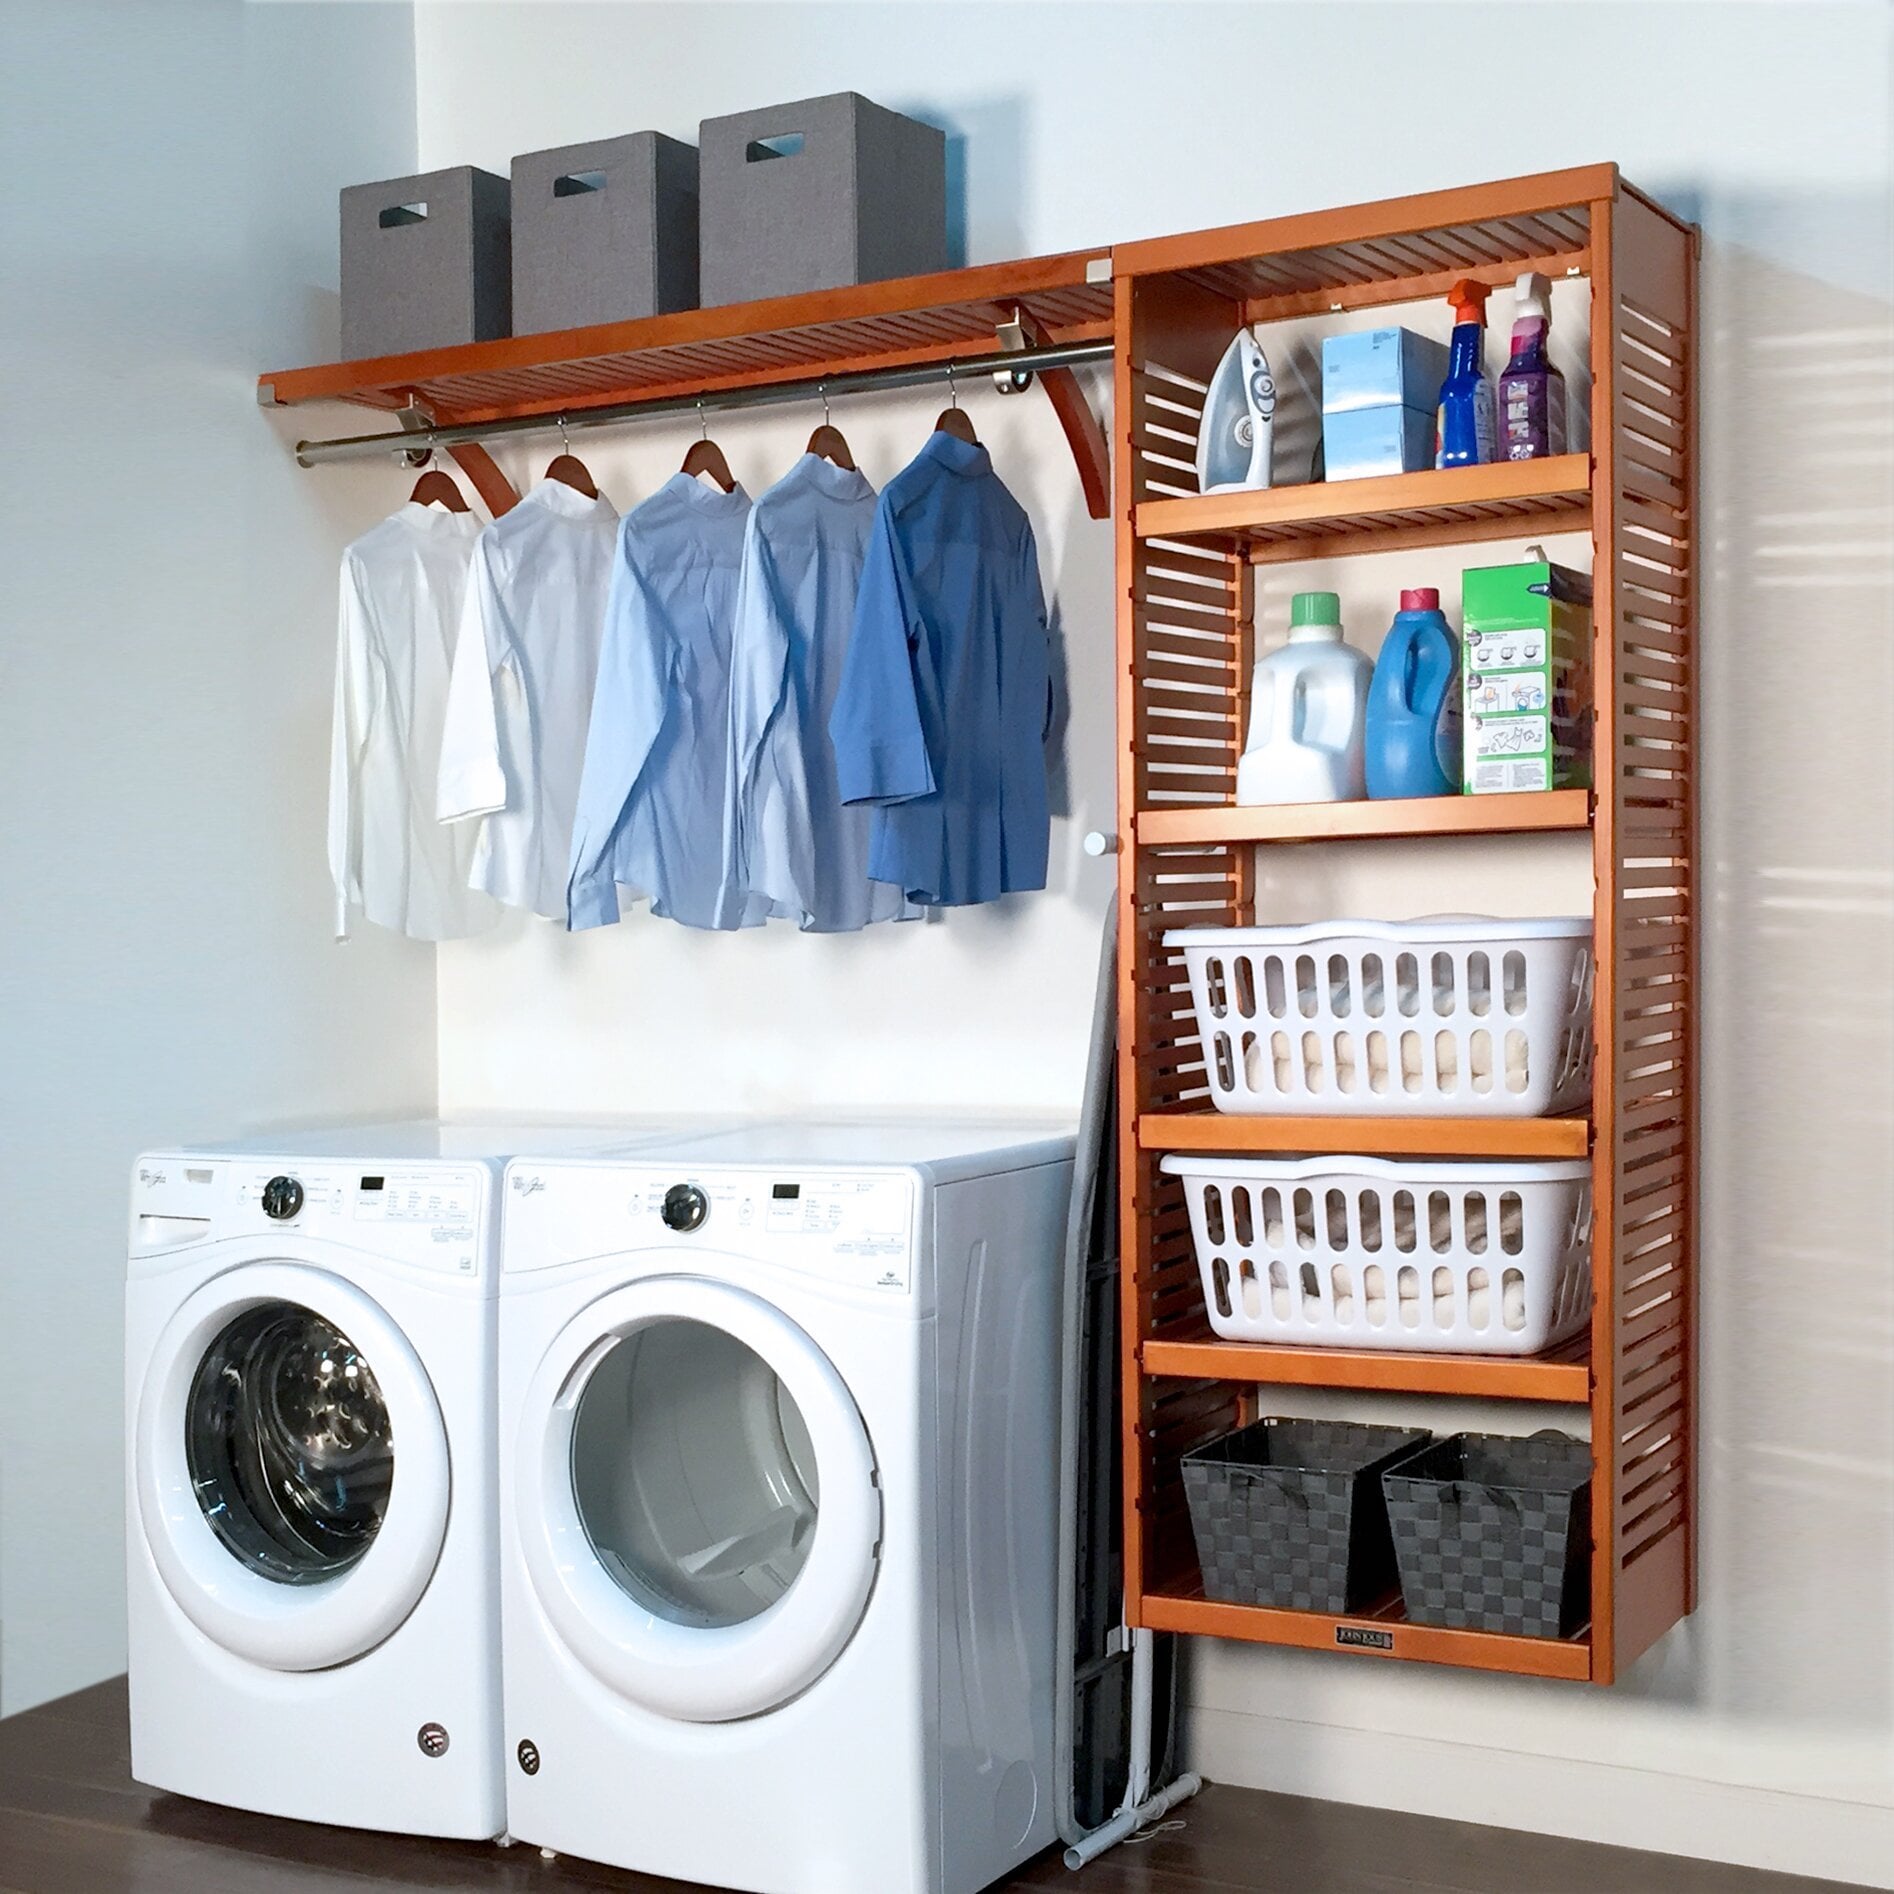 Laundry Room Storage, Laundry Organization Accessories